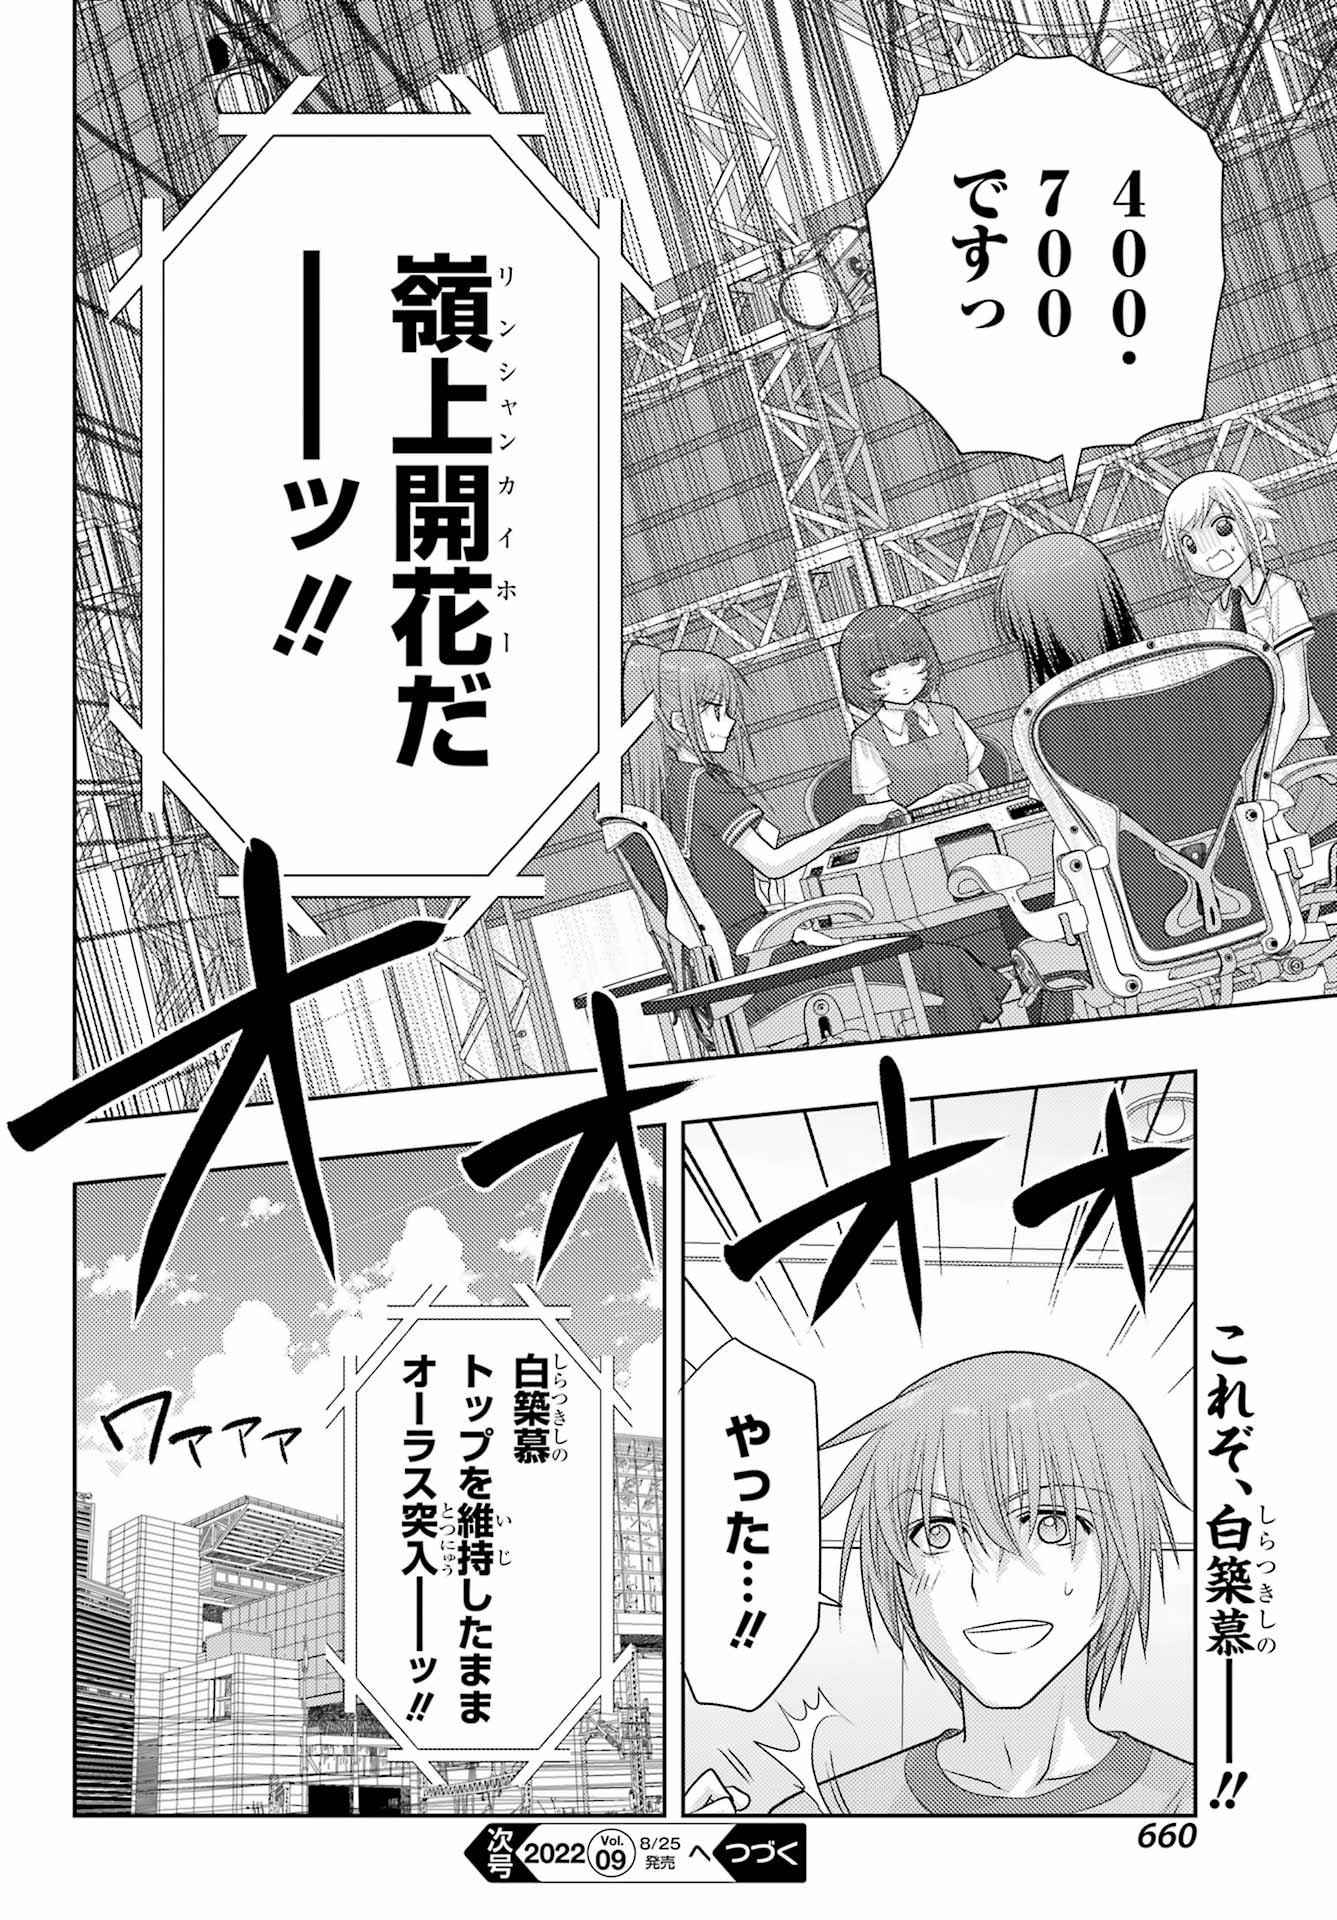 Shinohayu - The Dawn of Age Manga - Chapter 097 - Page 18